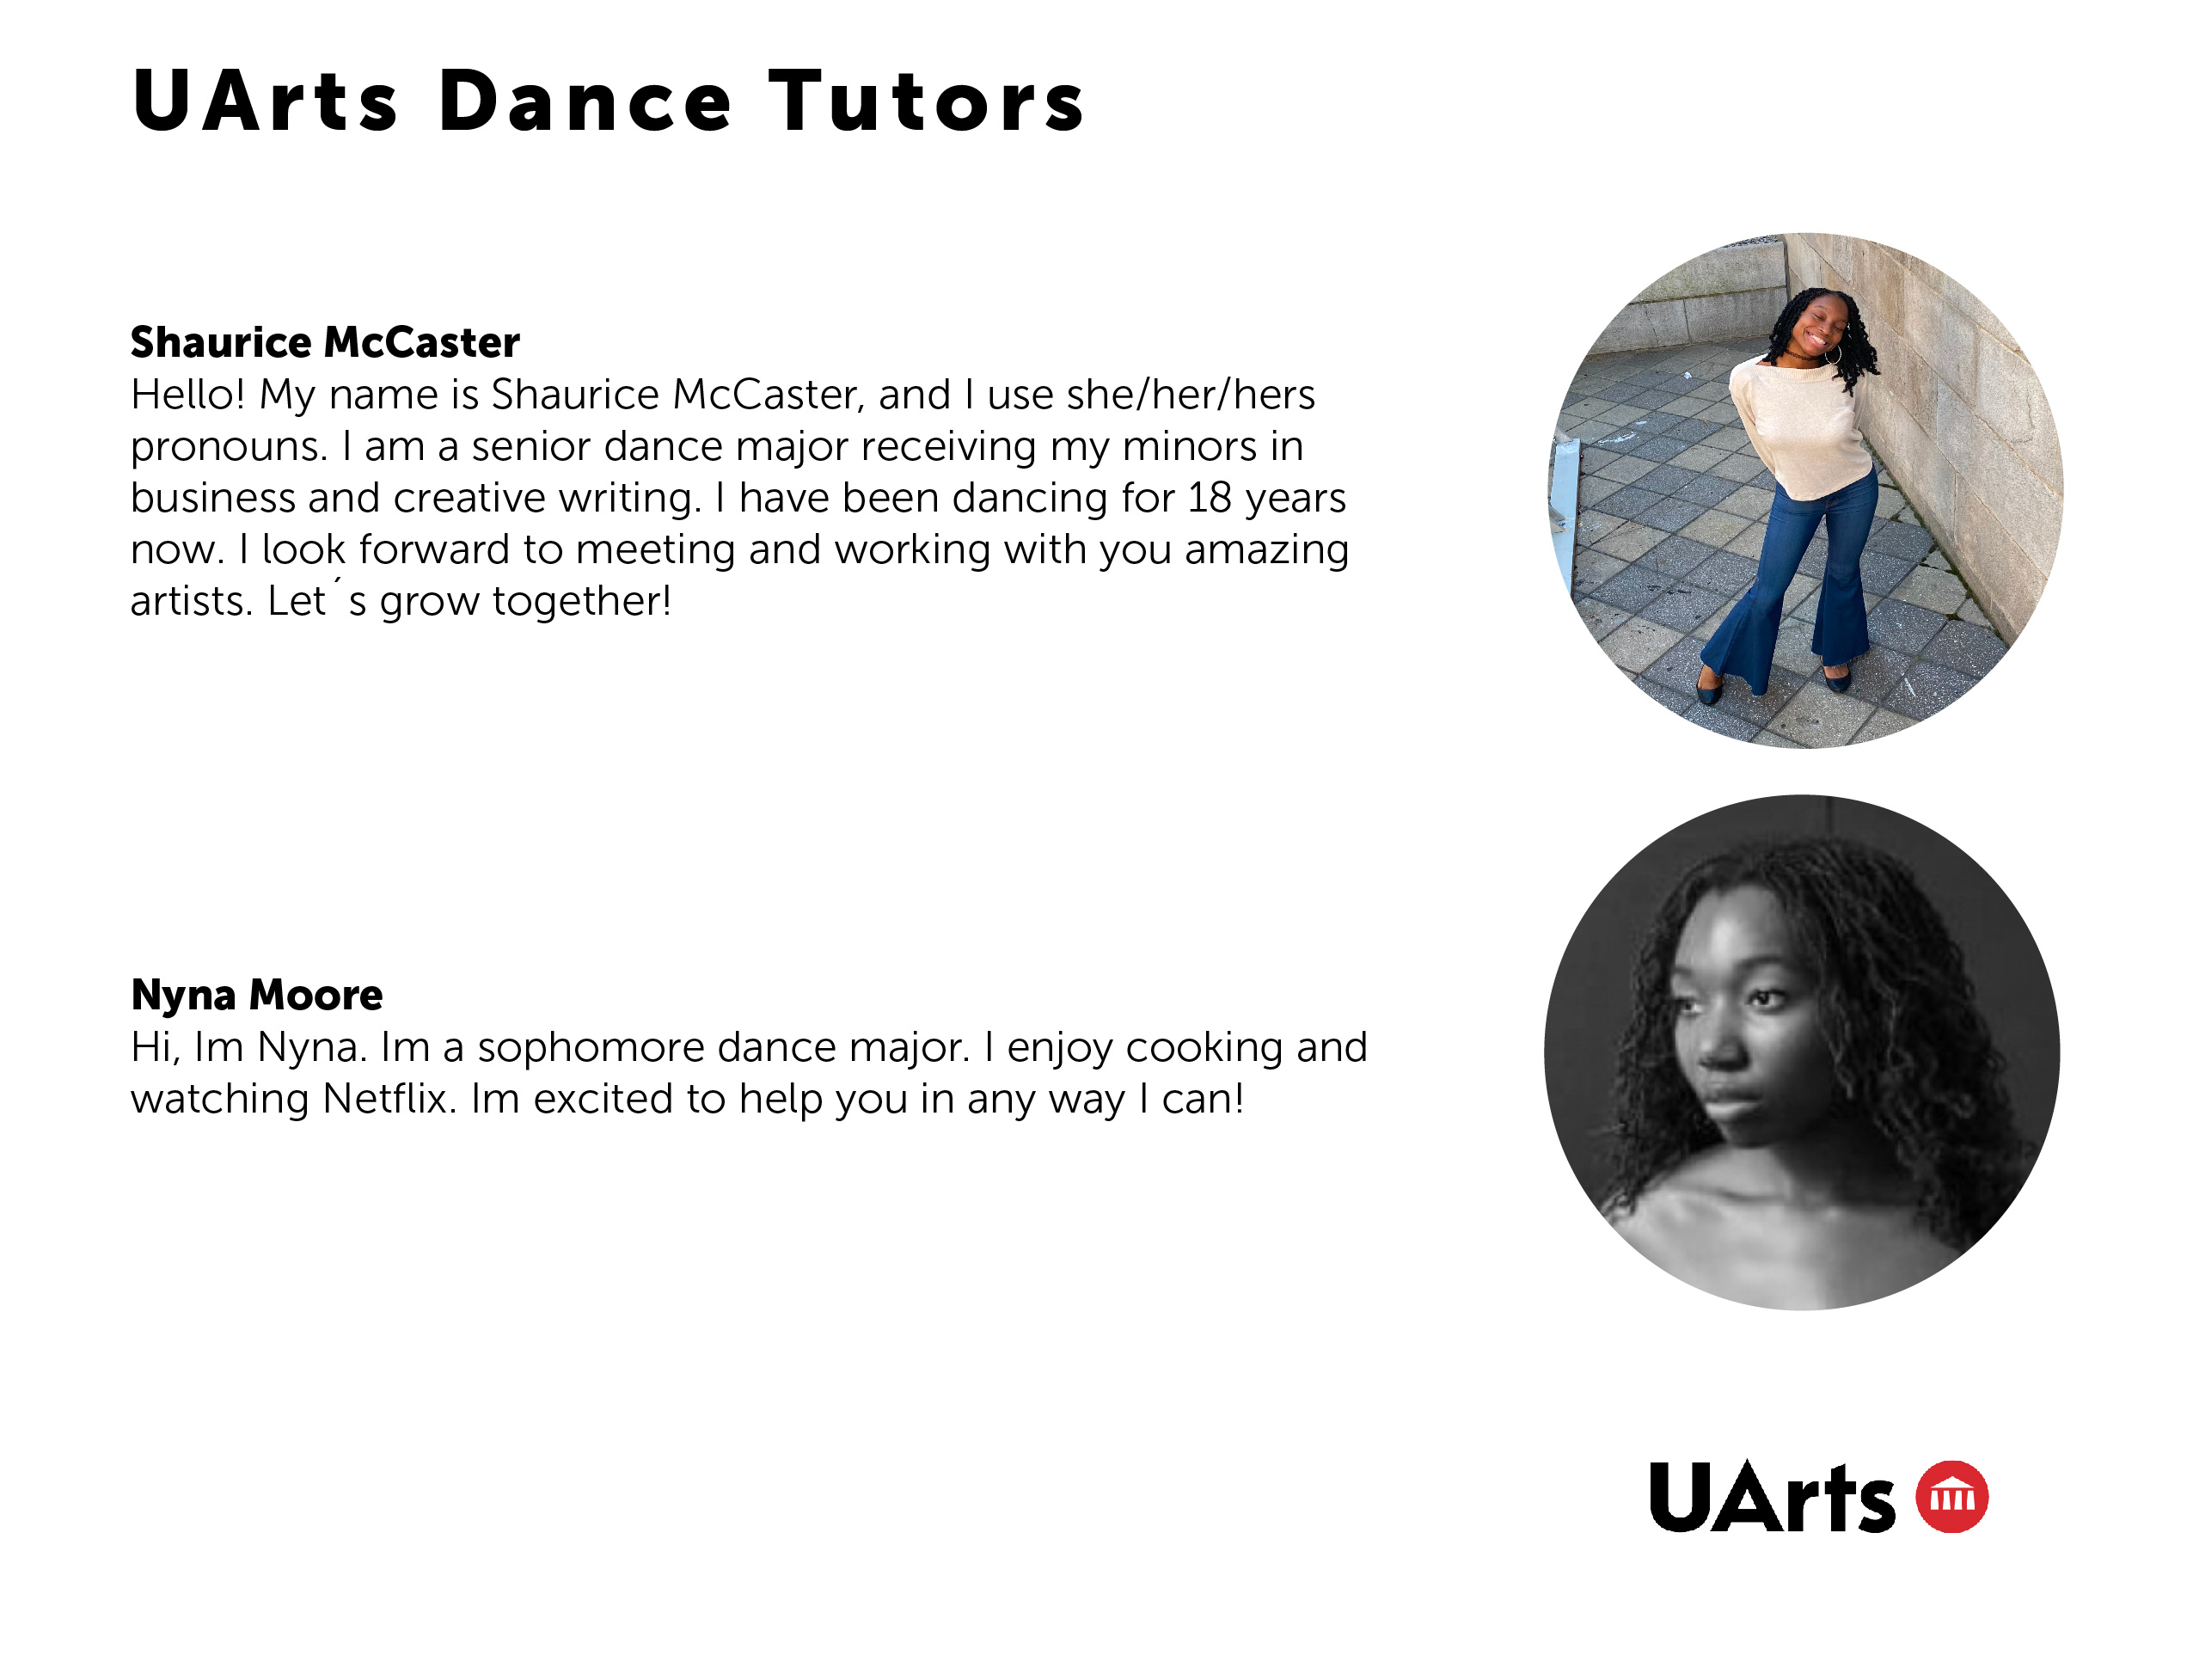 Dance tutor bios spr21